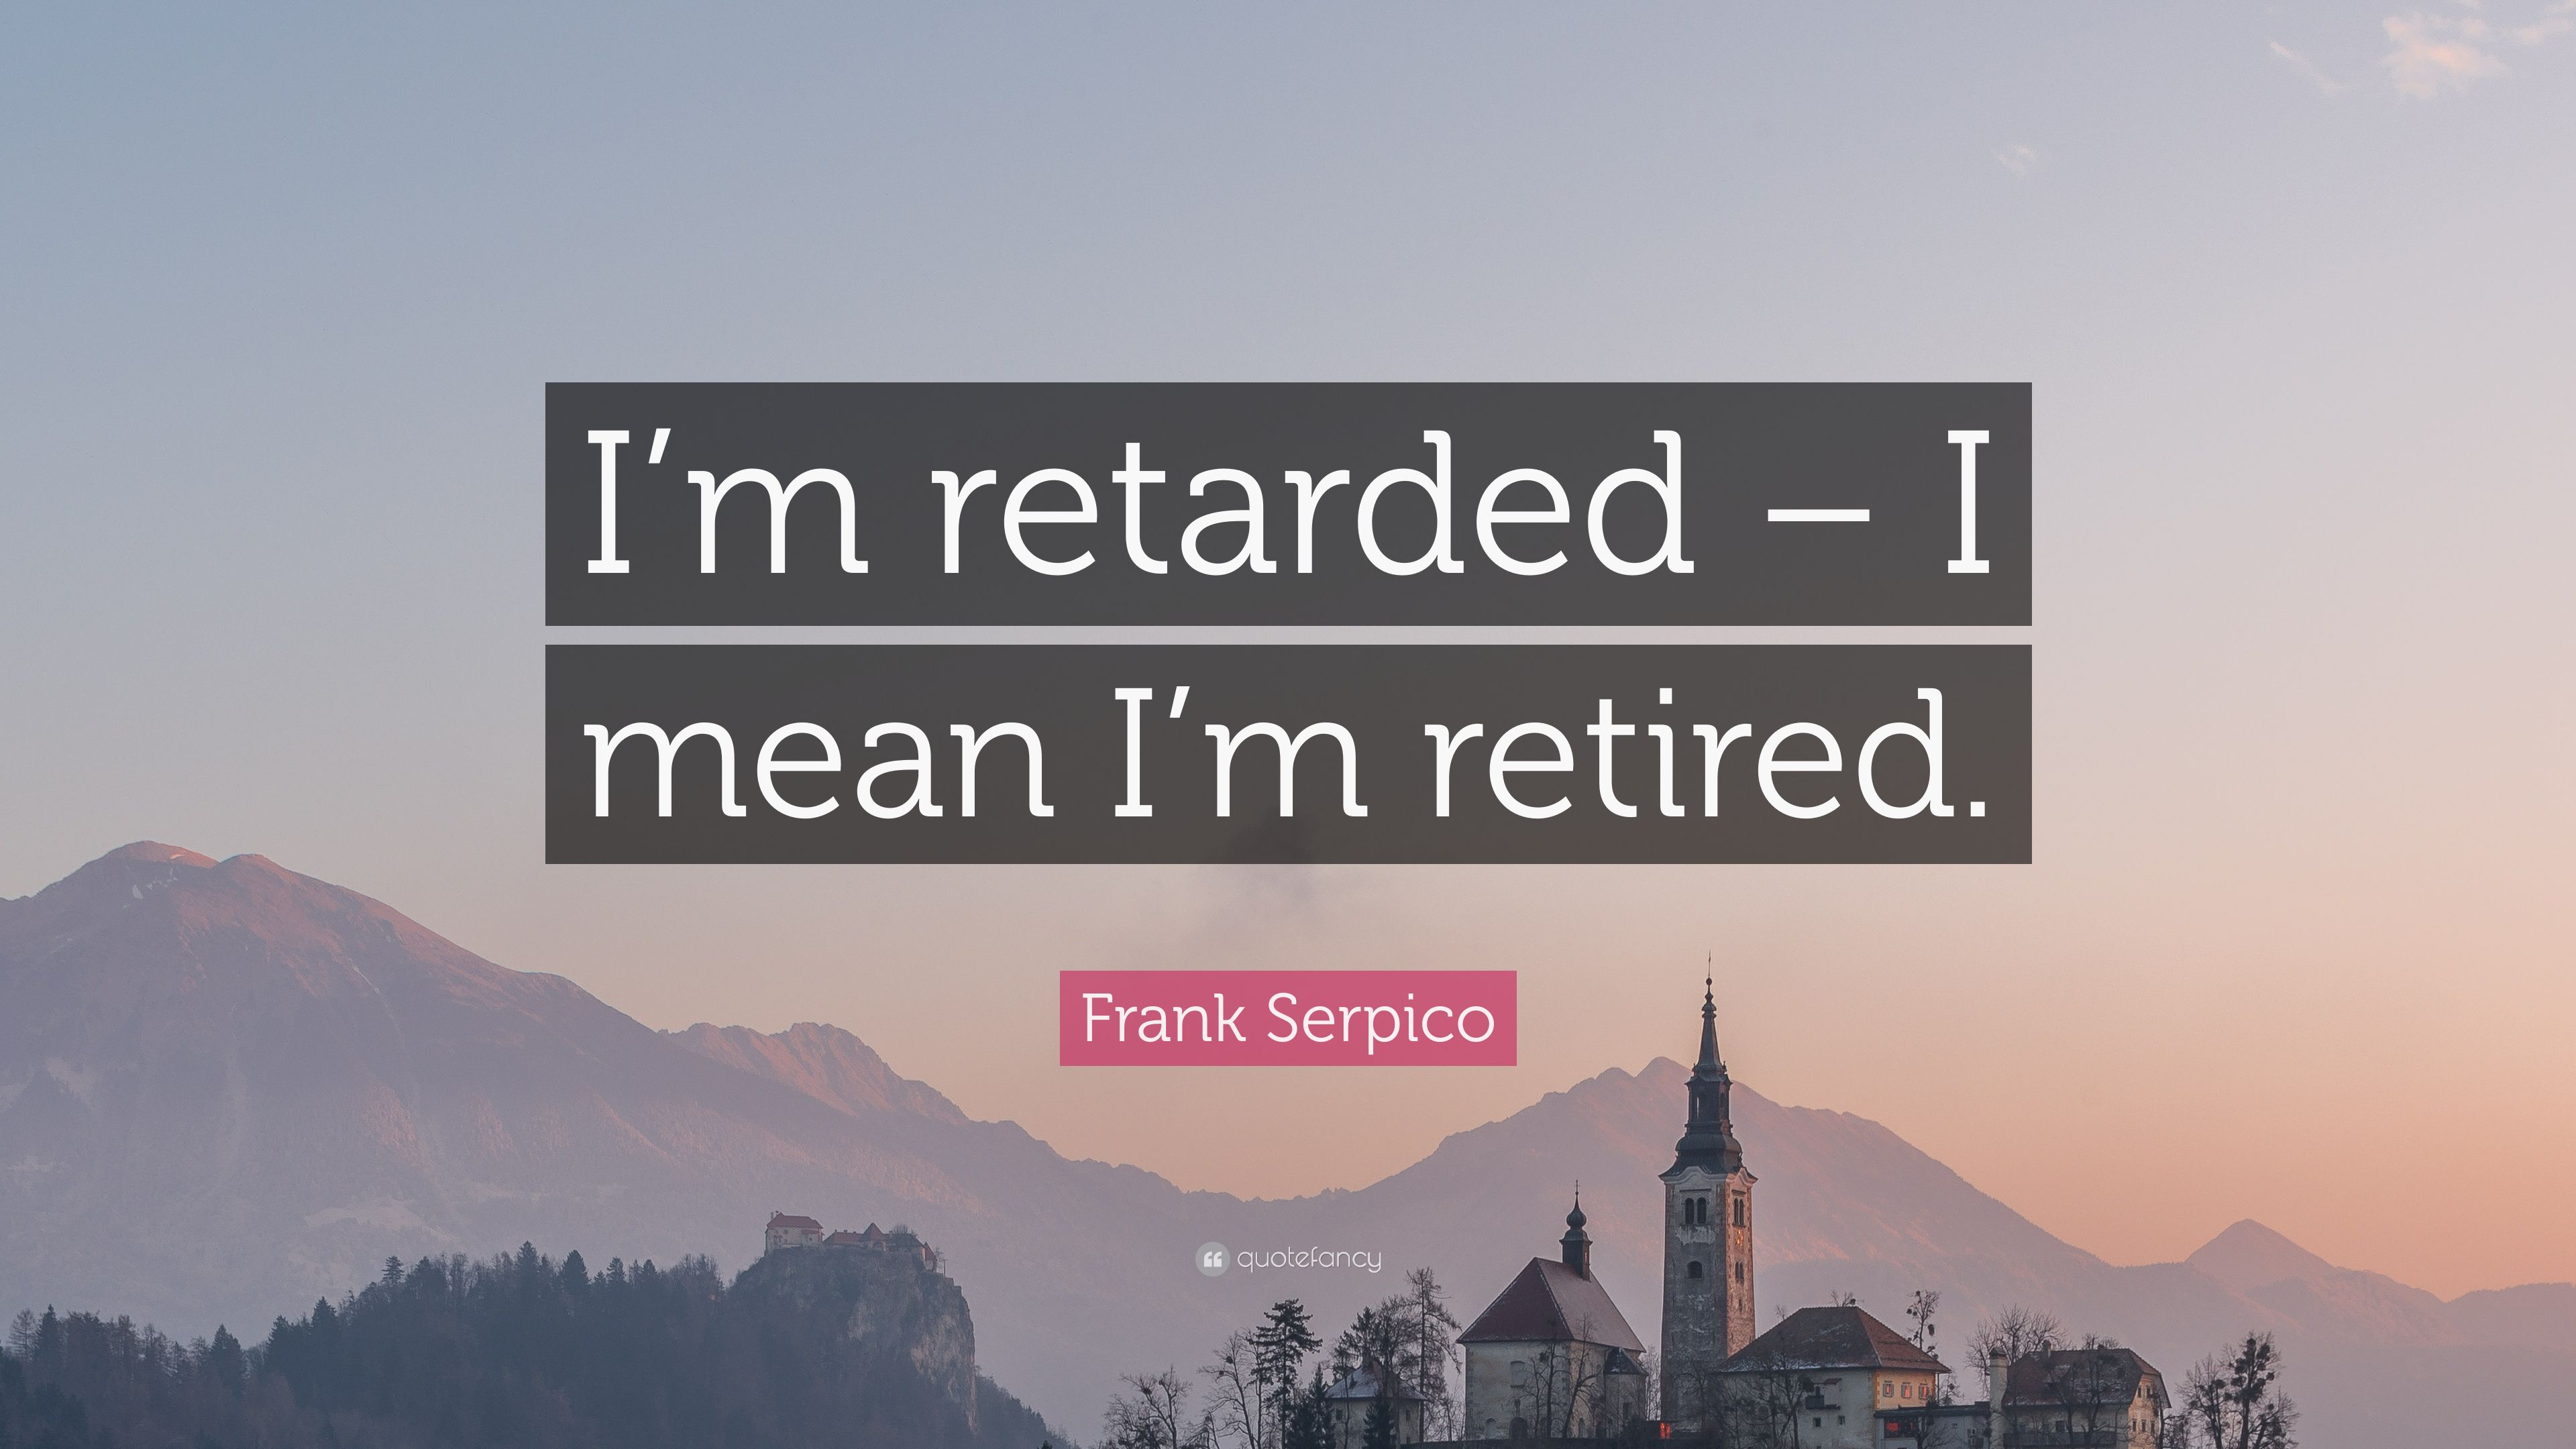 Frank Serpico Quote: “I'm retarded